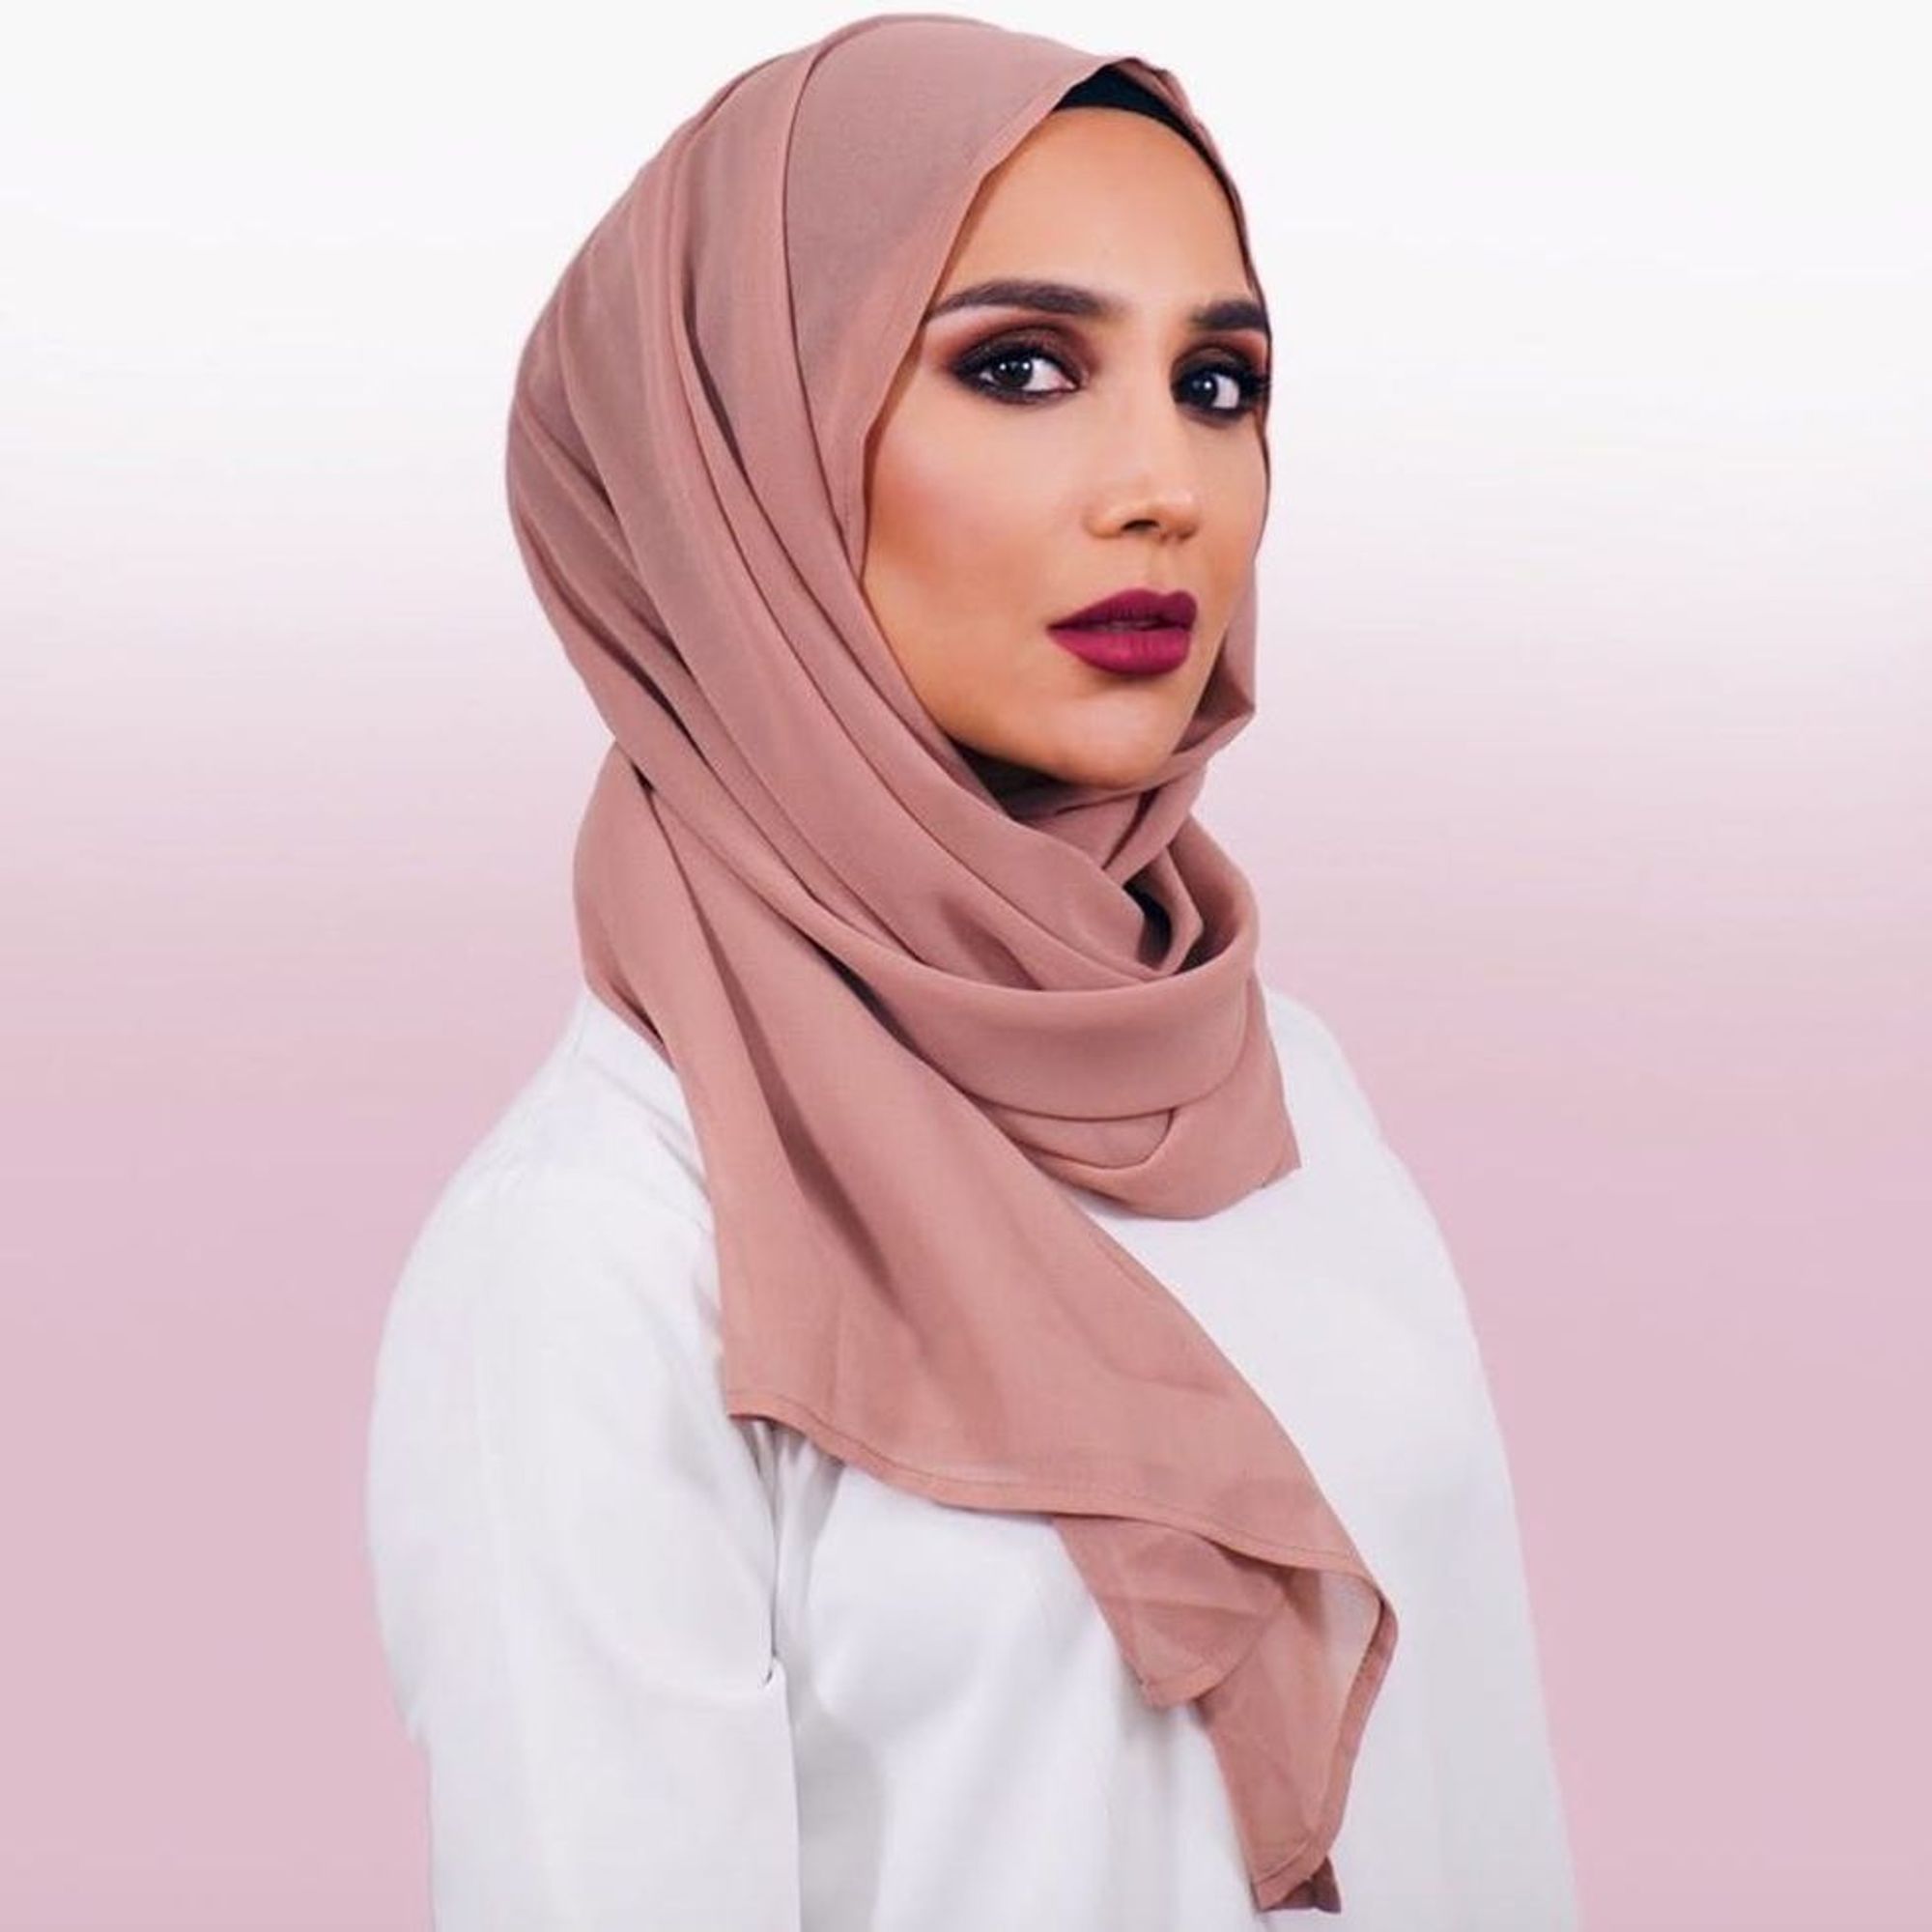 Meet Amena Khan The First Model To Wear A Hijab In A Major Hair